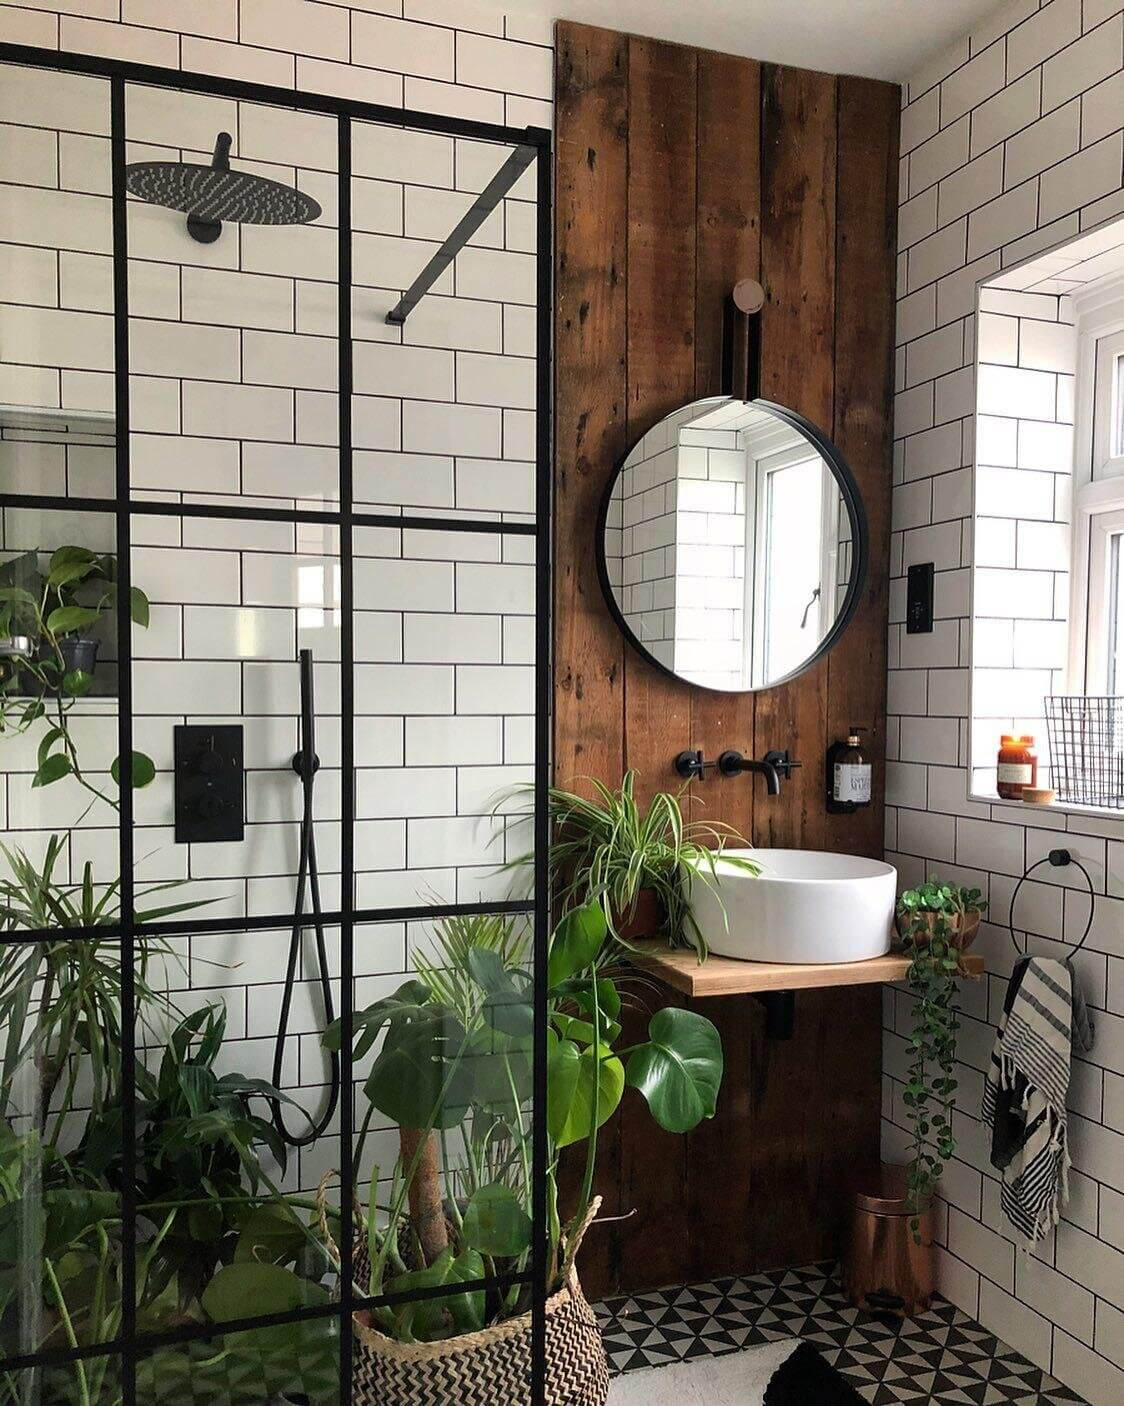 Small Bathroom Ideas & Make It Look Bigger - The Nordroom